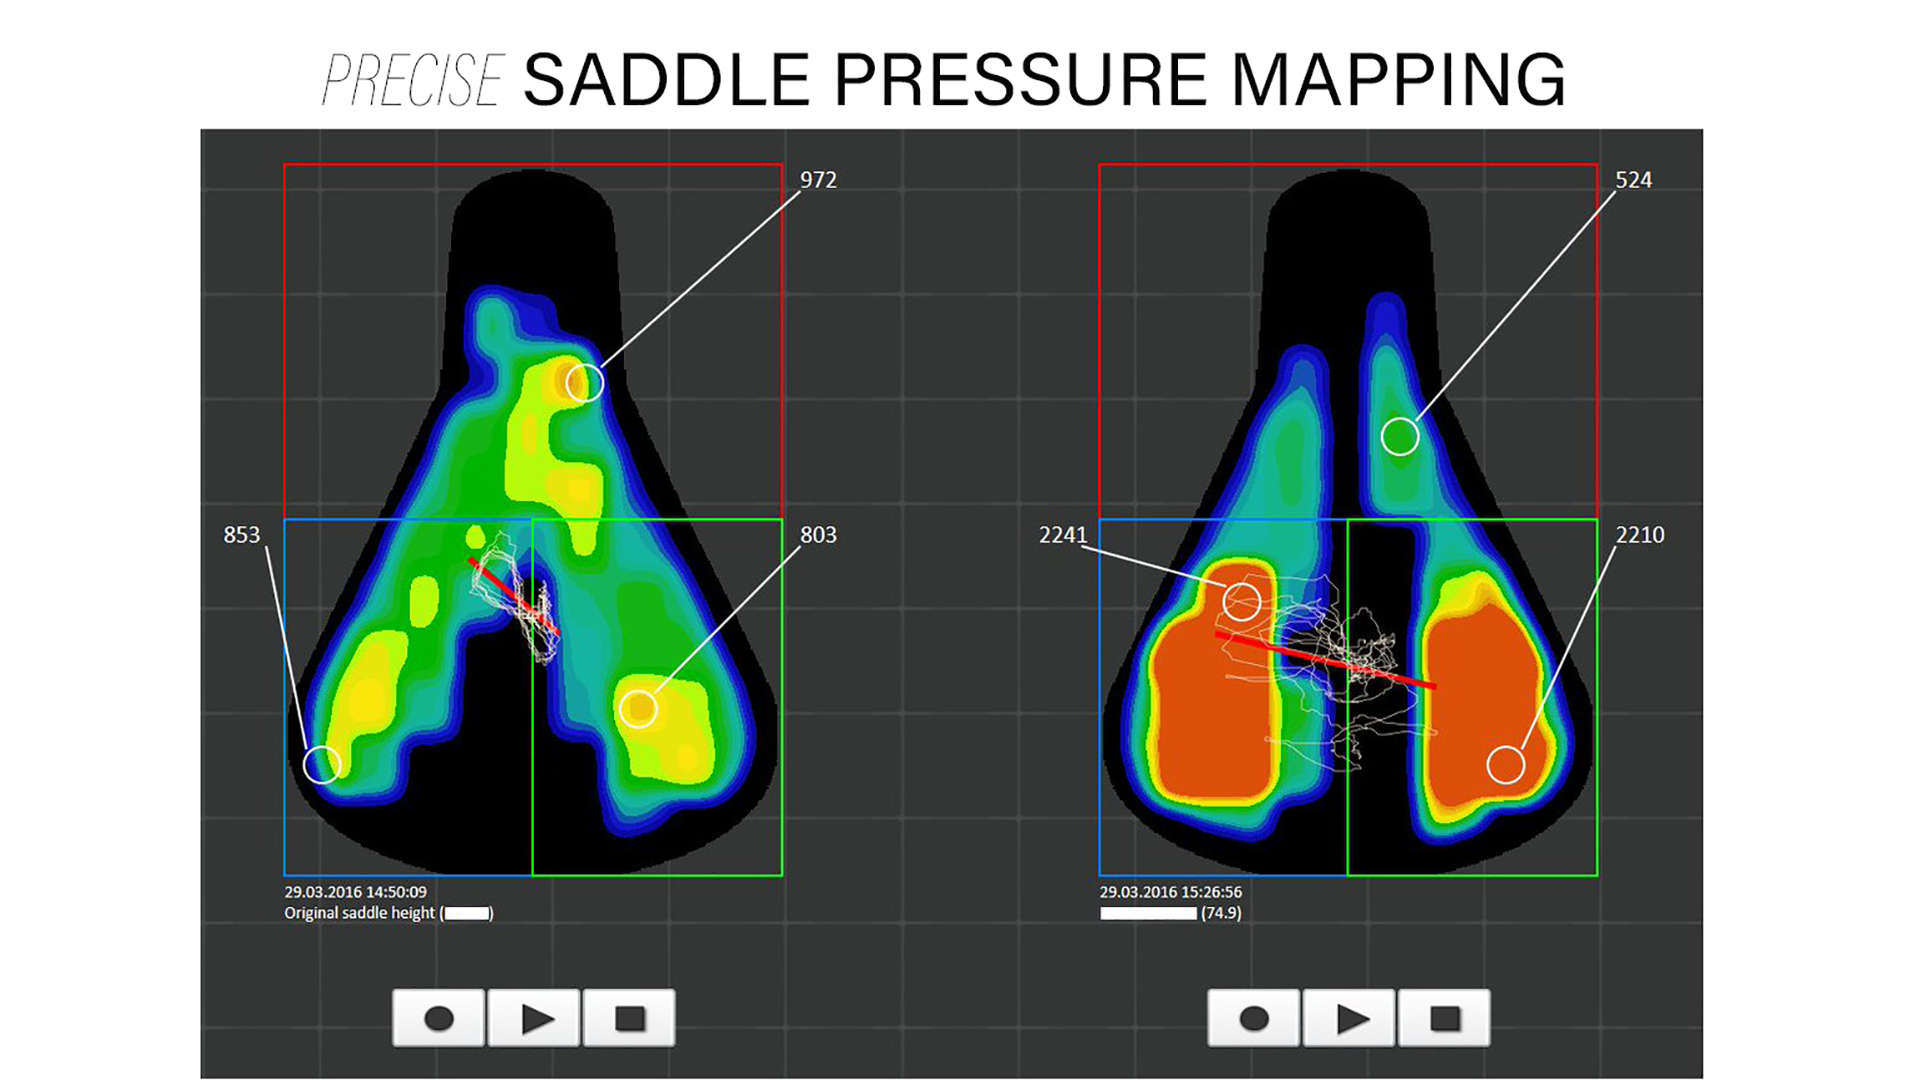 Saddle pressure mapping image